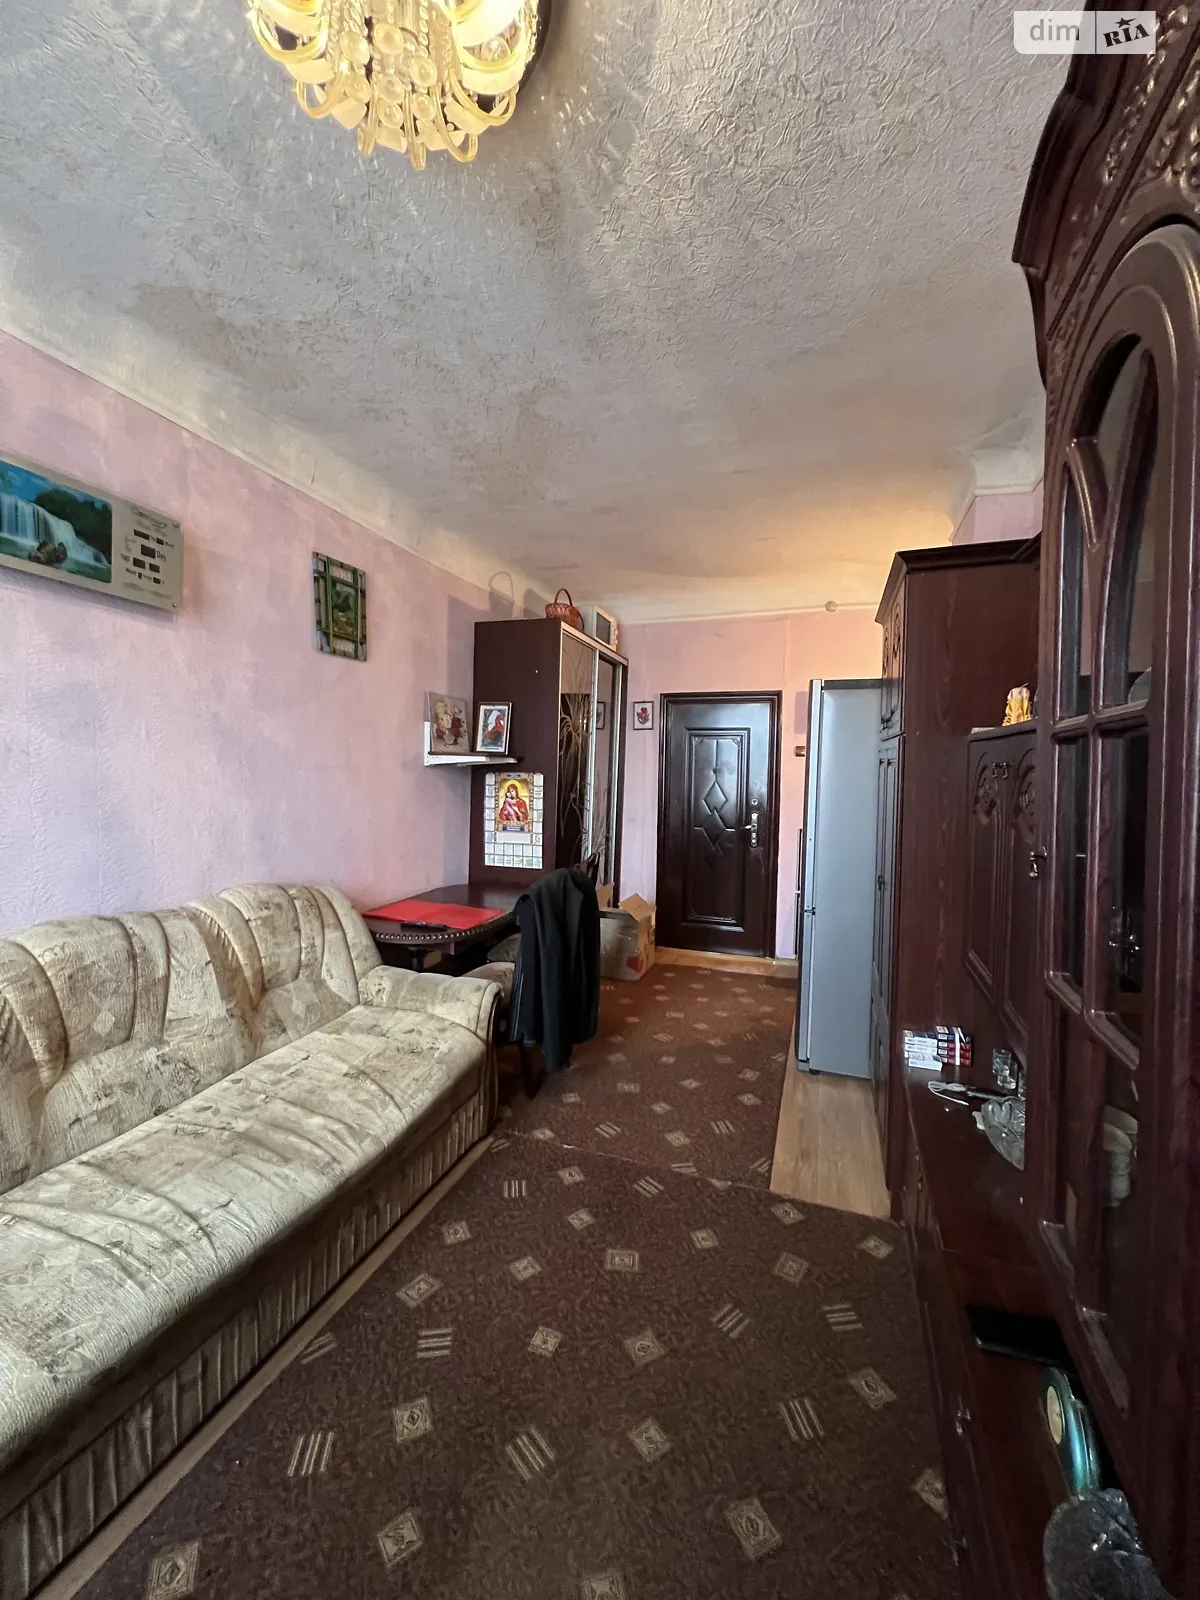 Продается комната 38 кв. м в Харькове - фото 3